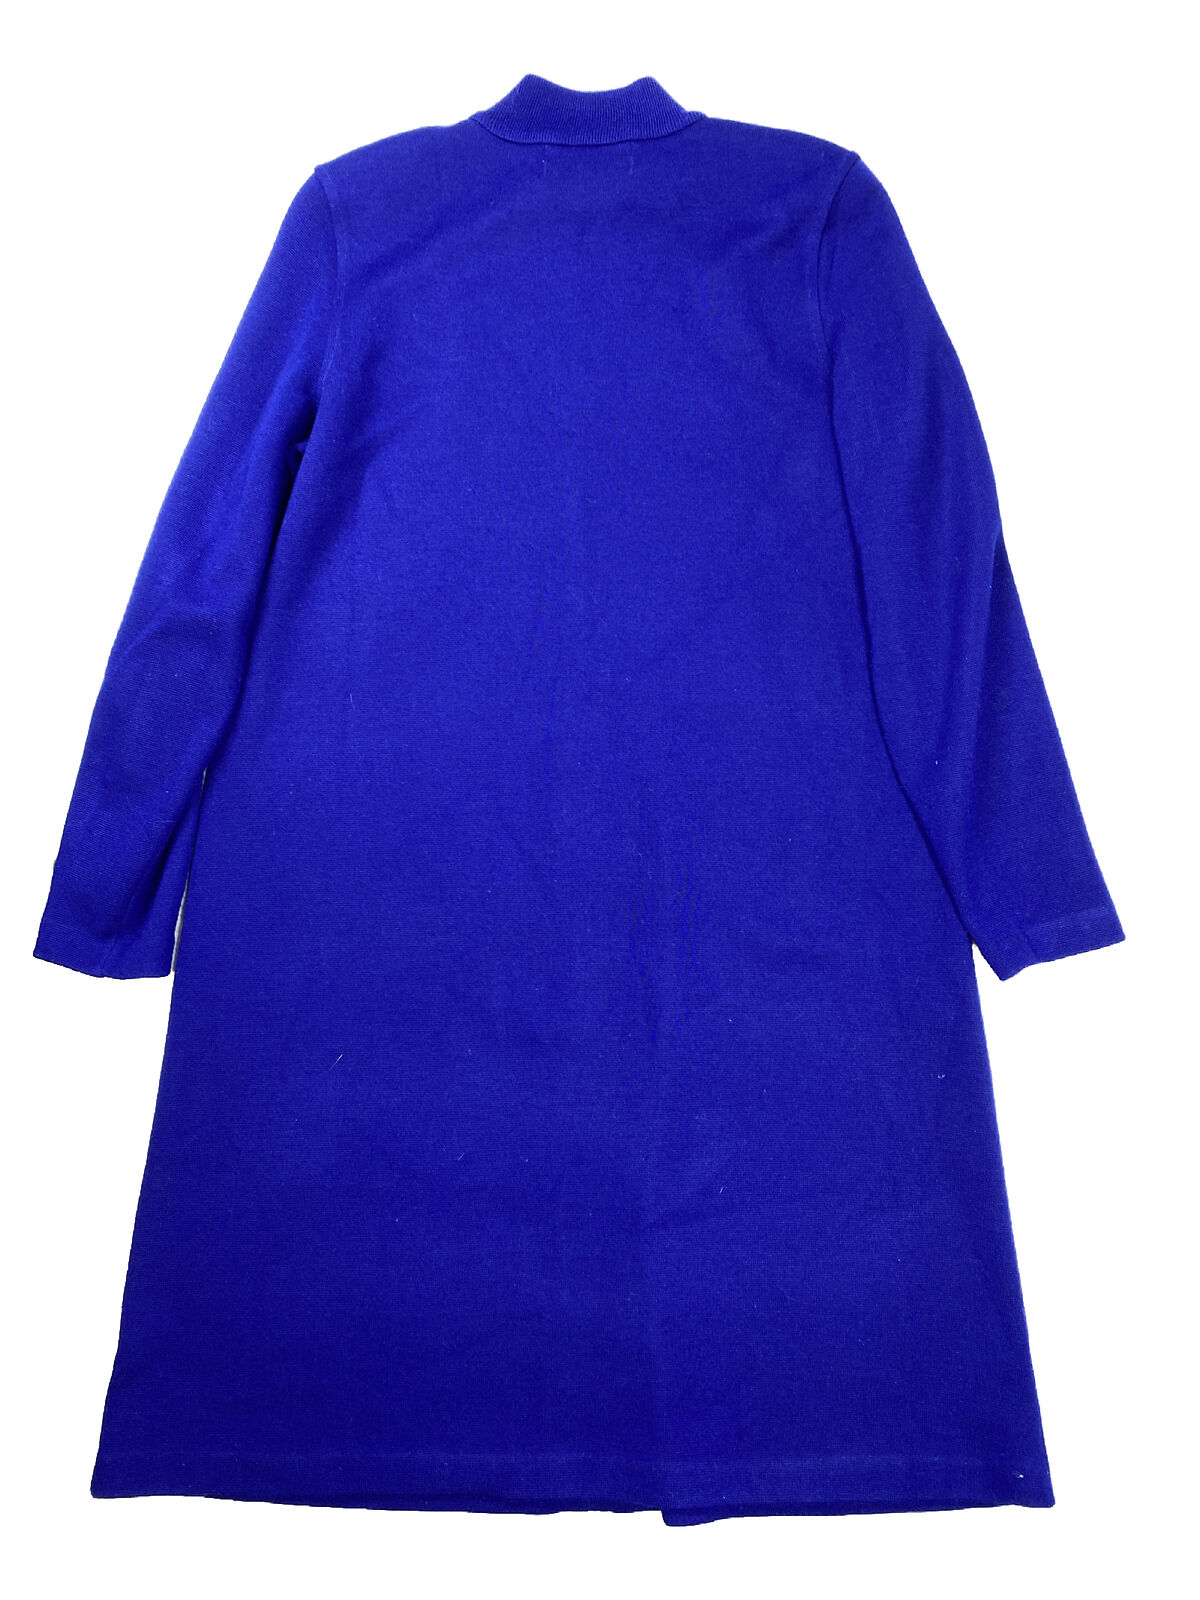 Nina Charles for Kasper Vestido tipo suéter de lana de manga larga azul para mujer - M